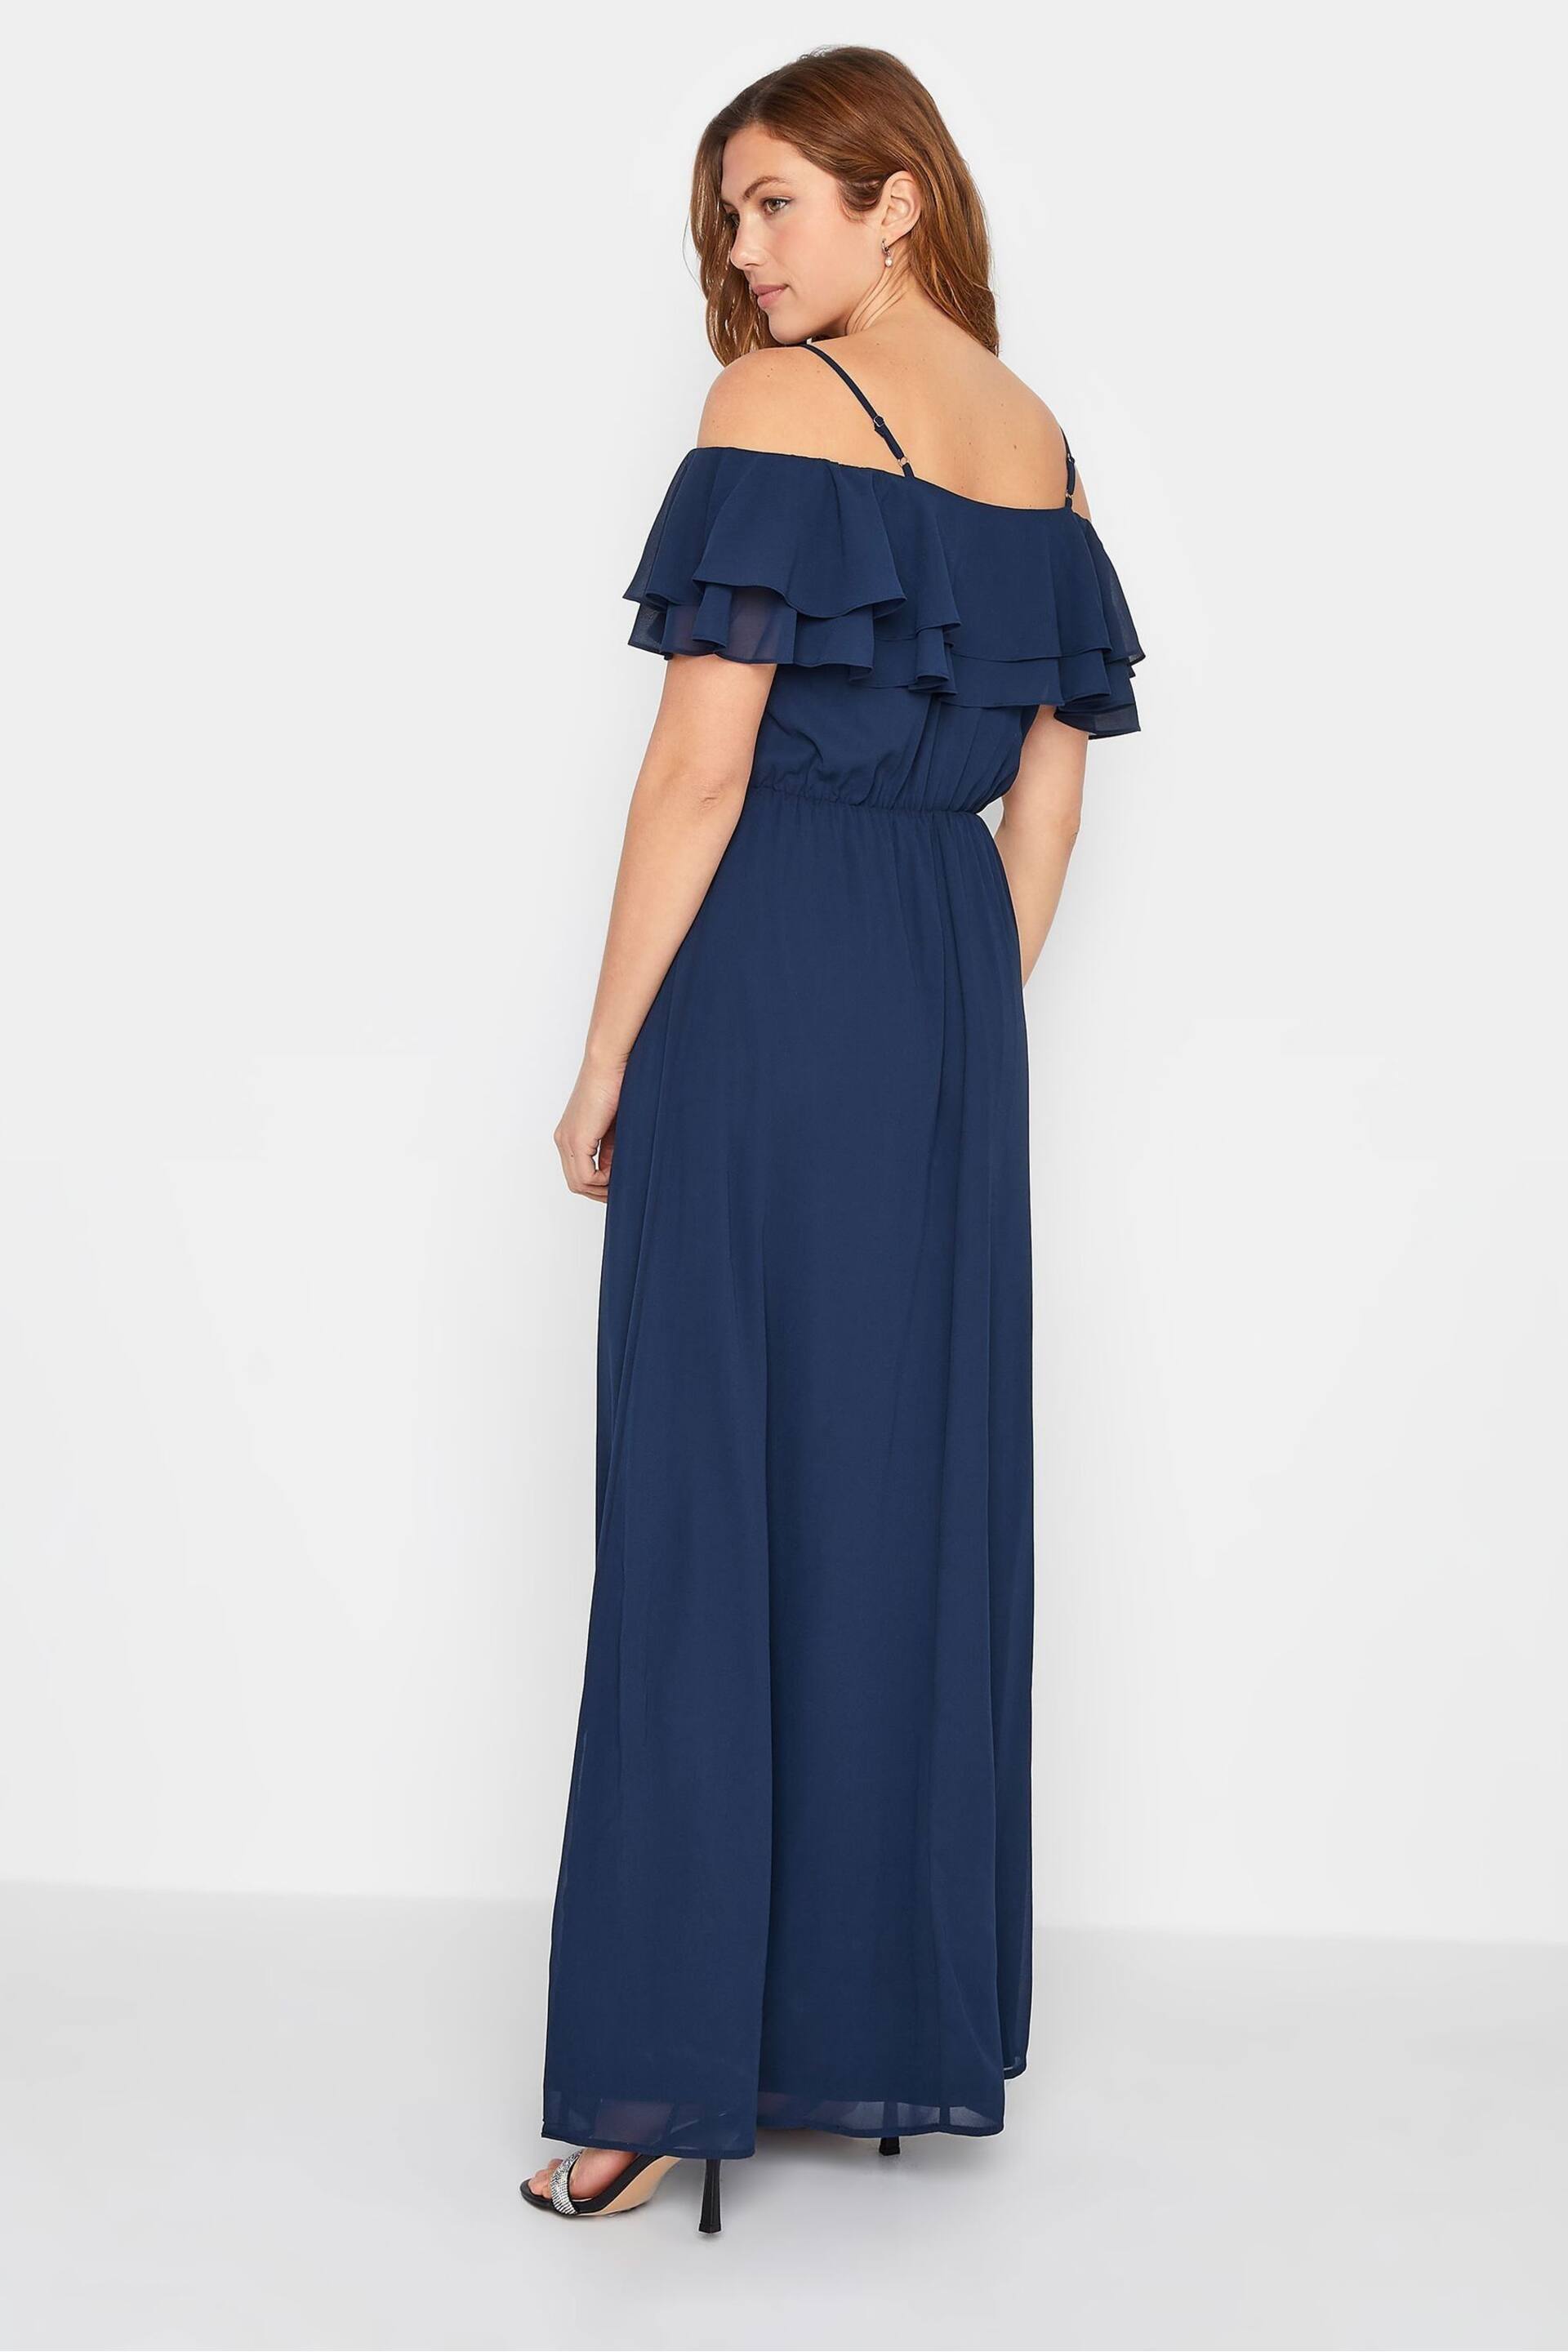 Long Tall Sally Blue Ruffle Maxi Dress - Image 2 of 4